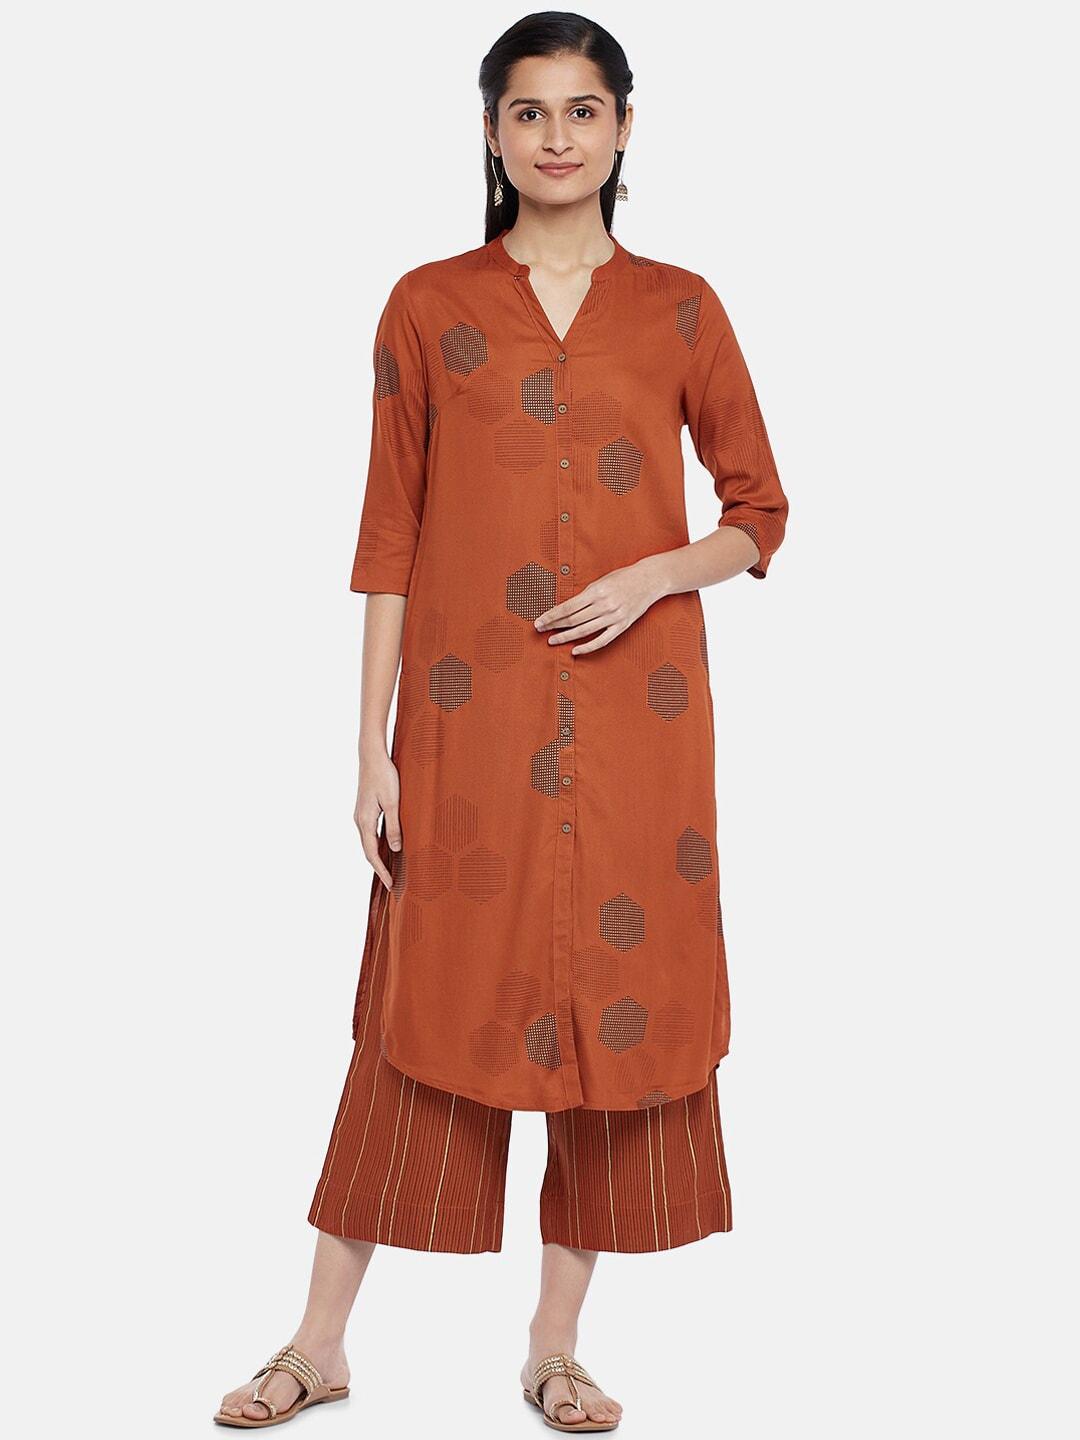 rangmanch by pantaloons women rust ethnic motifs printed kurti with palazzos